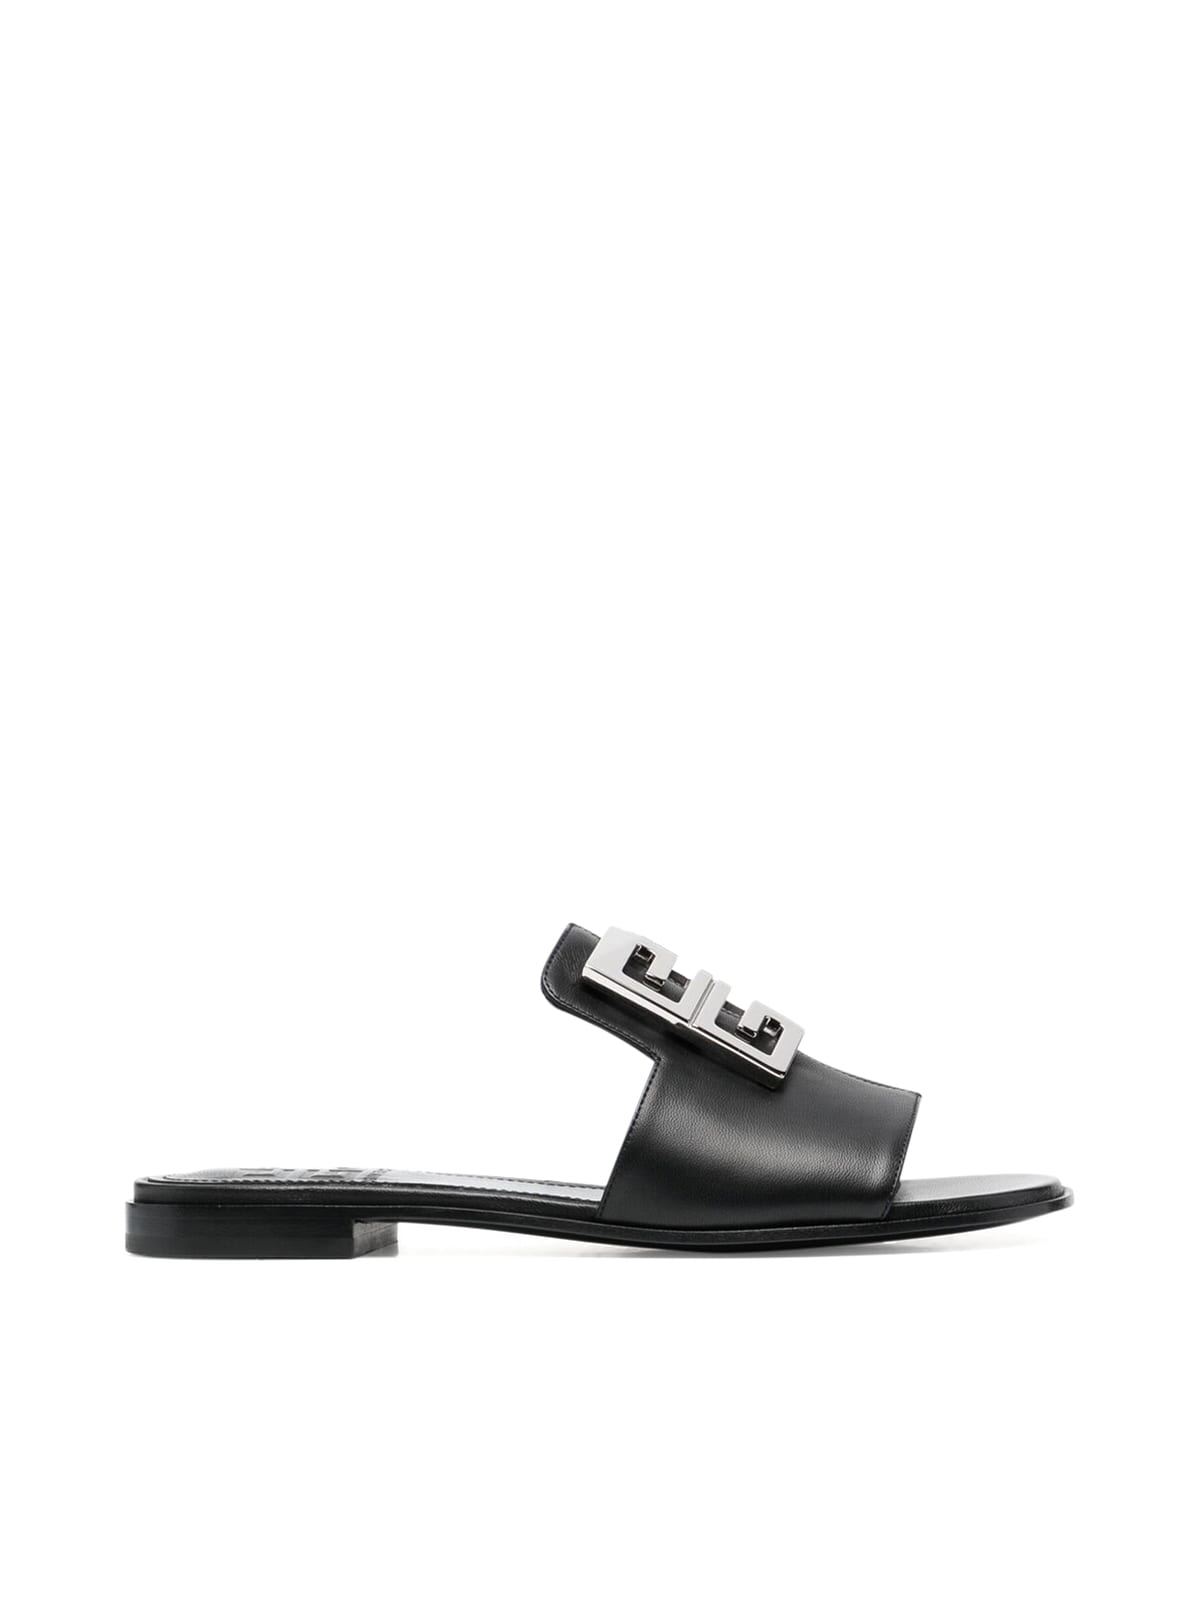 Givenchy 4g Flat Mule Sandal